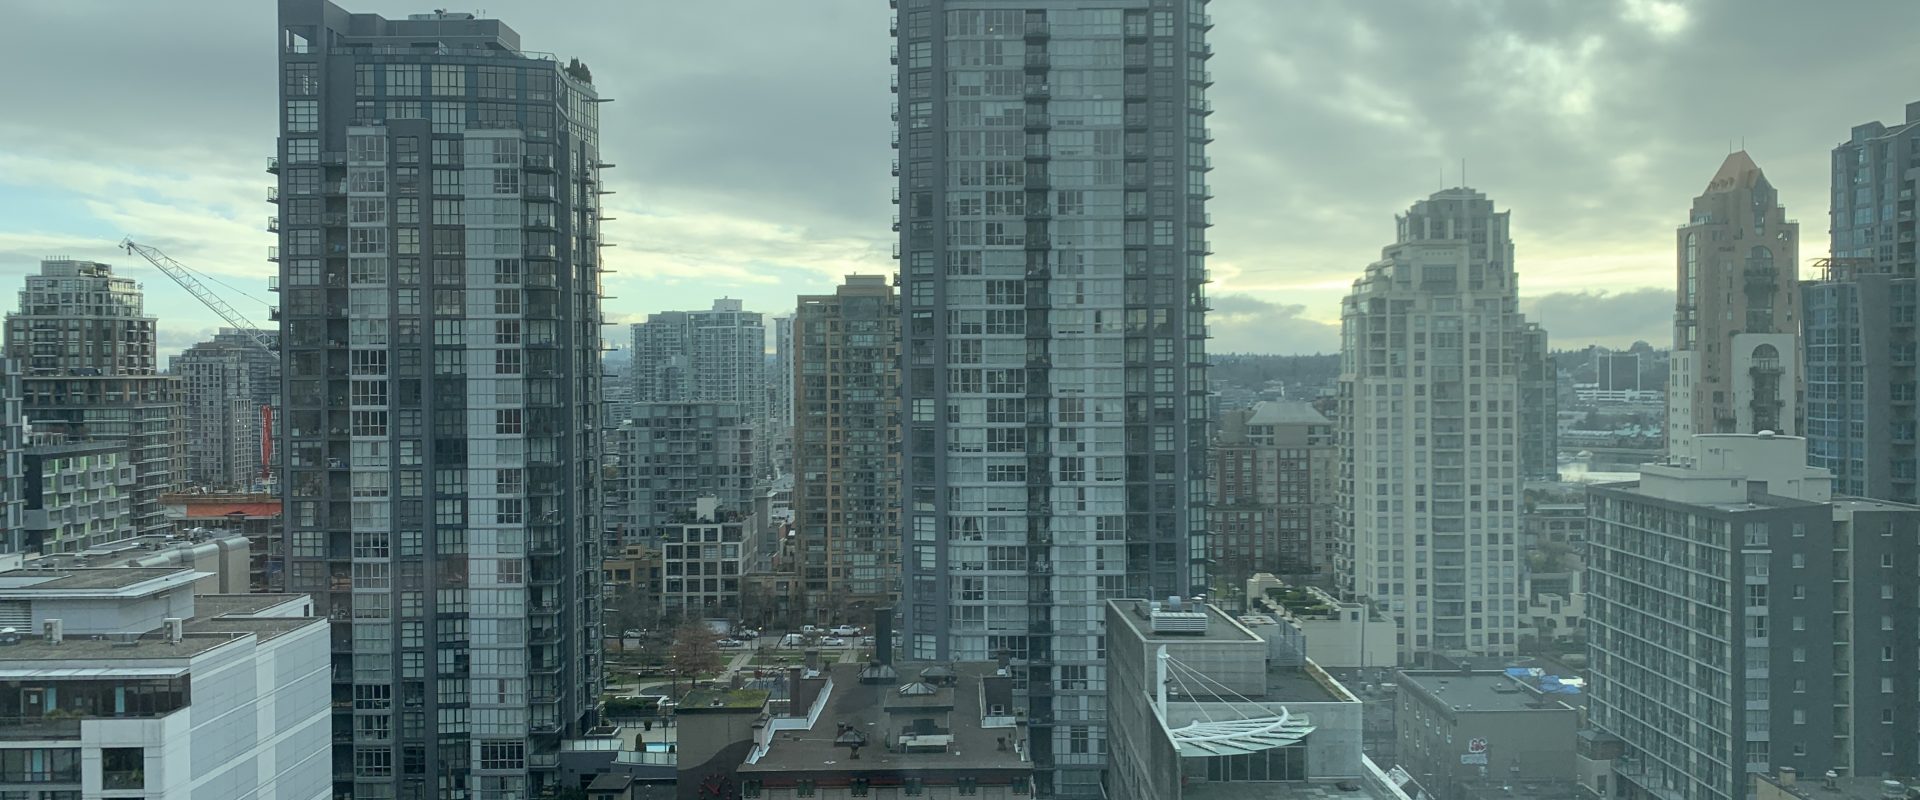 【Downtown】温哥华市中心两室两卫城景高级公寓出租